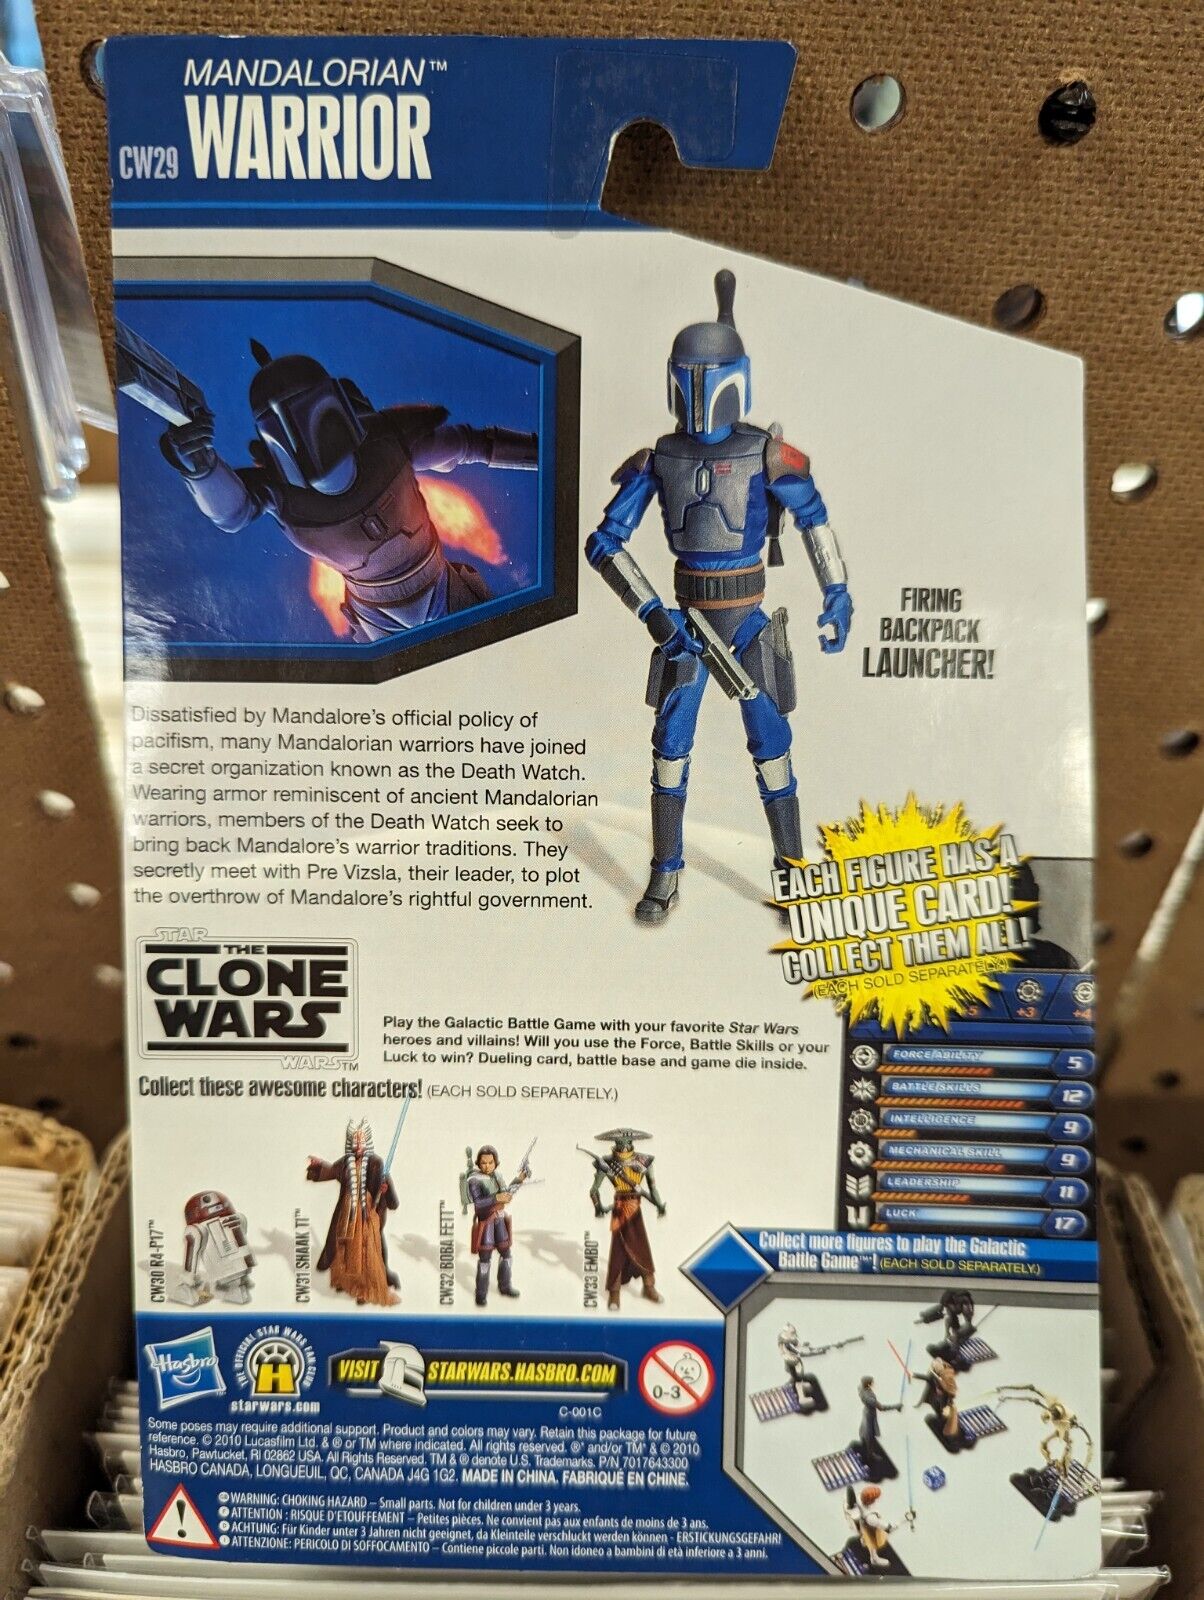 Star Wars The Clone Wars Mandalorian Warrior CW29 Figure